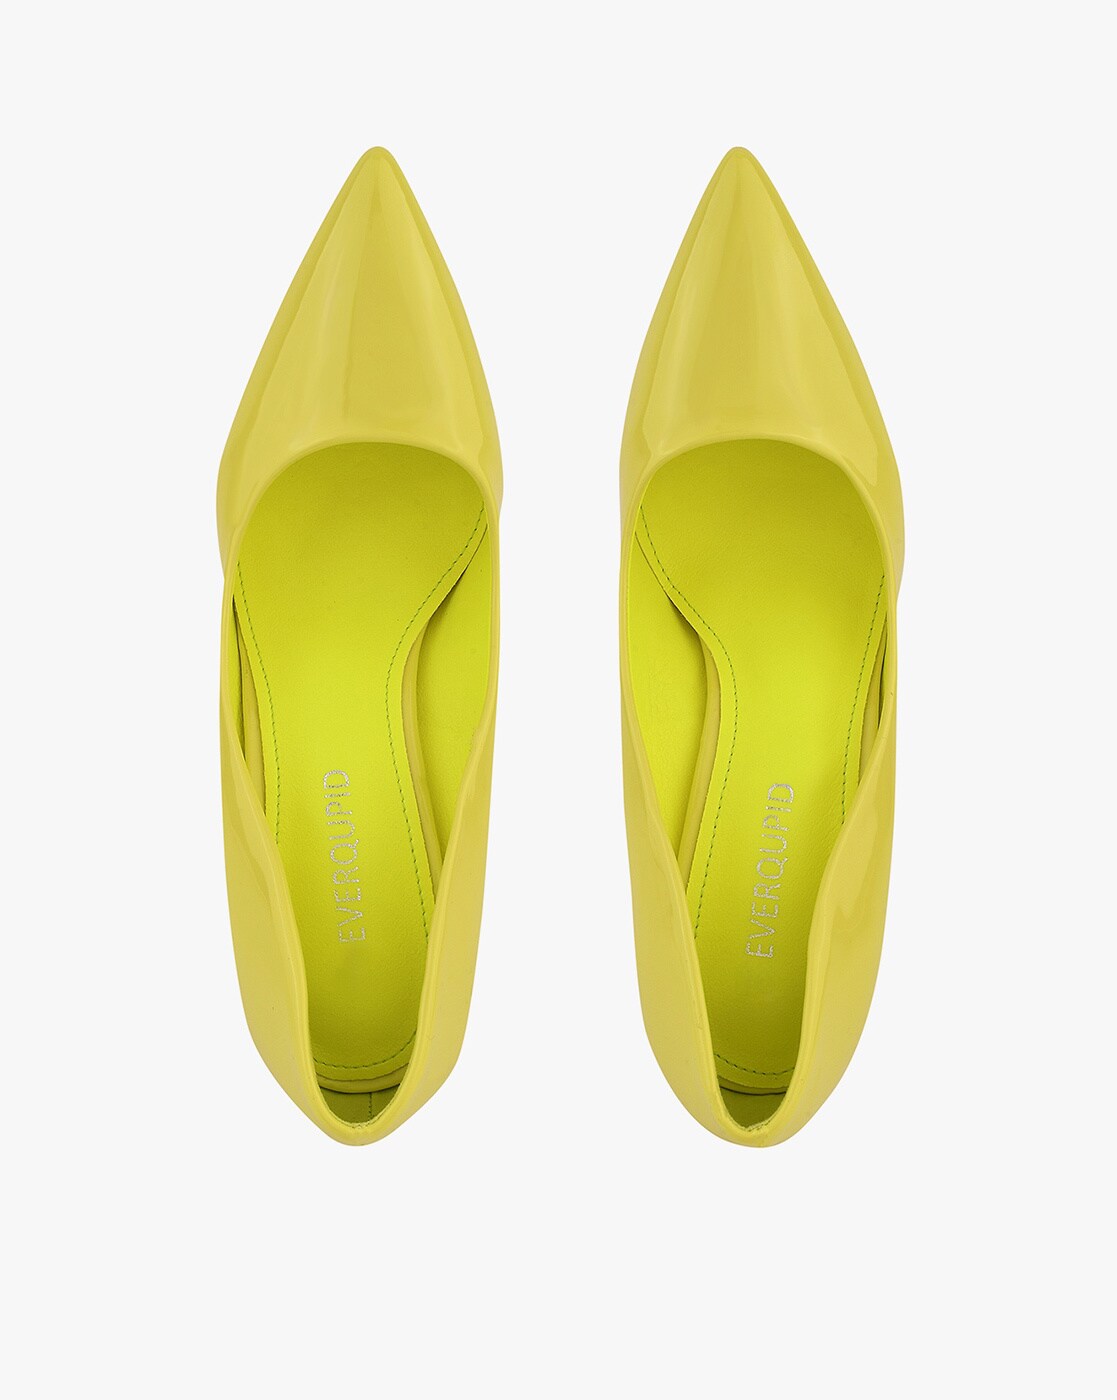 Shoes | Used Neon Yellow Pointy Heels | Poshmark